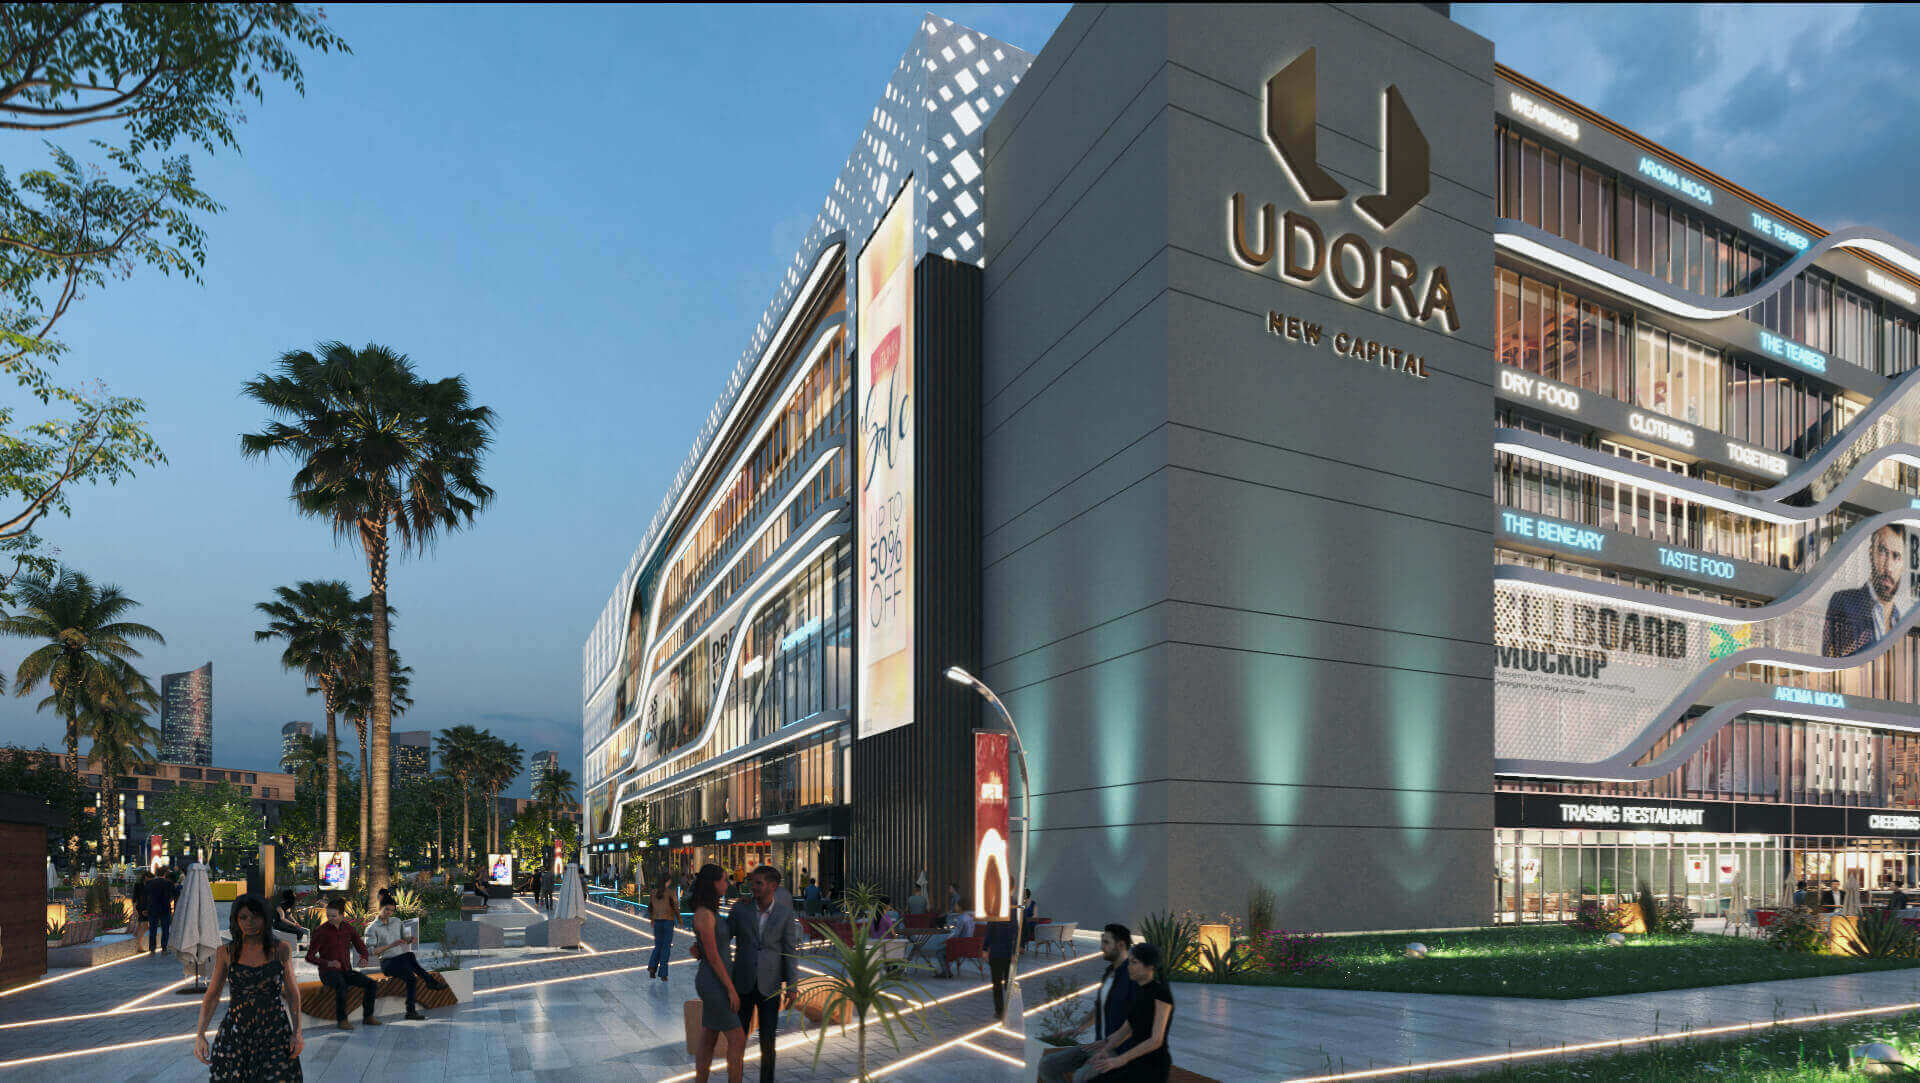 Udora New Capital Mall Hometown